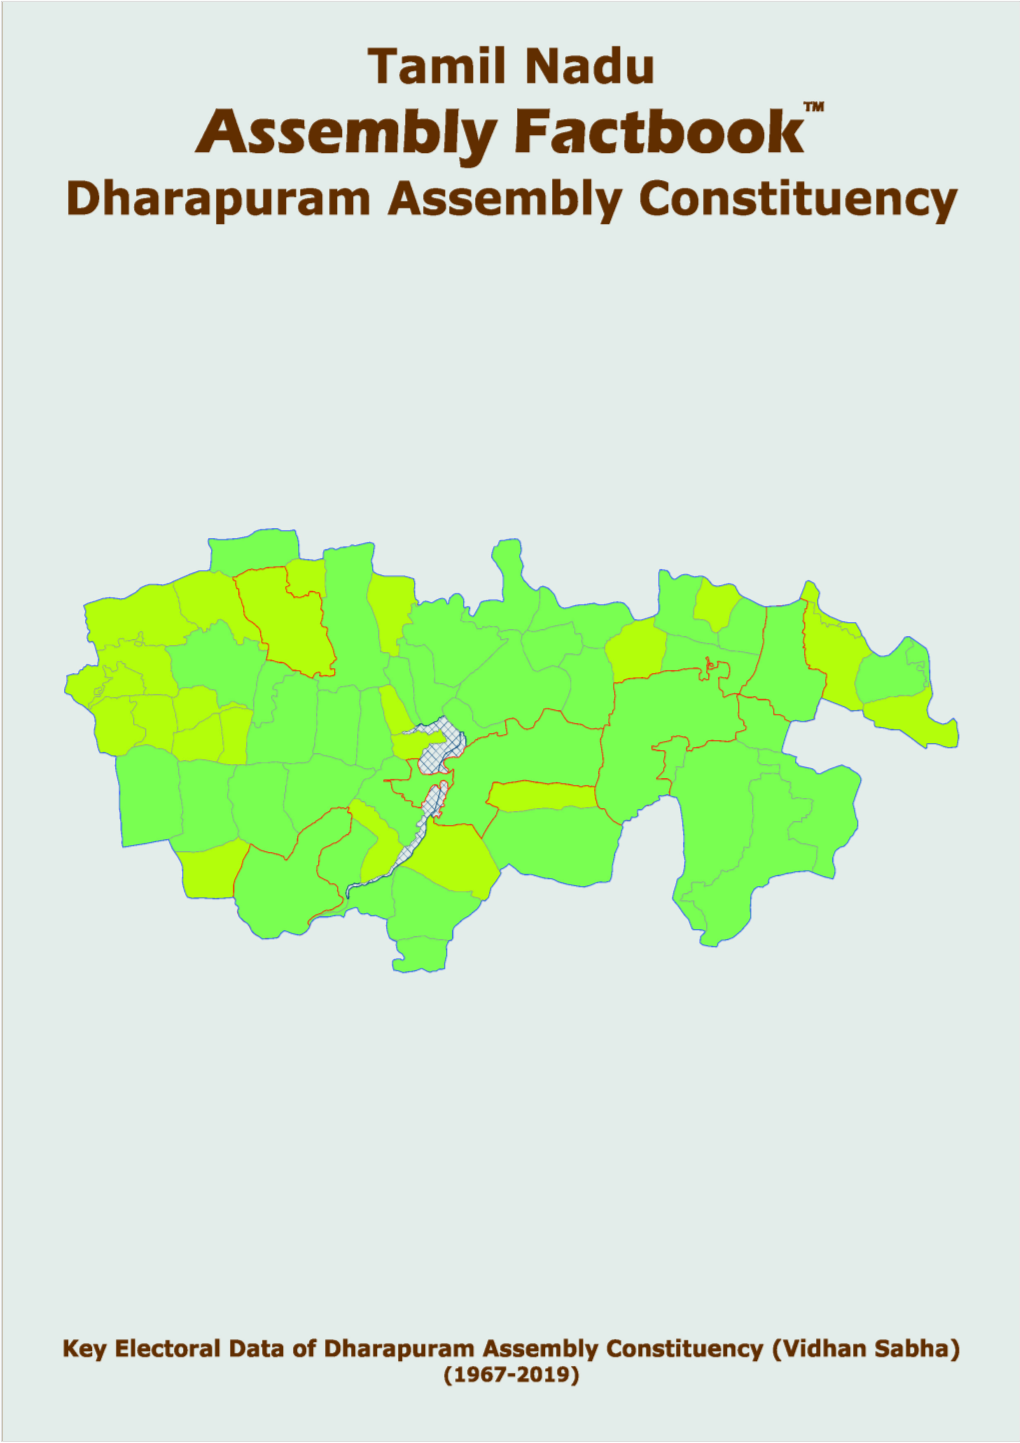 Dharapuram Assembly Tamil Nadu Factbook